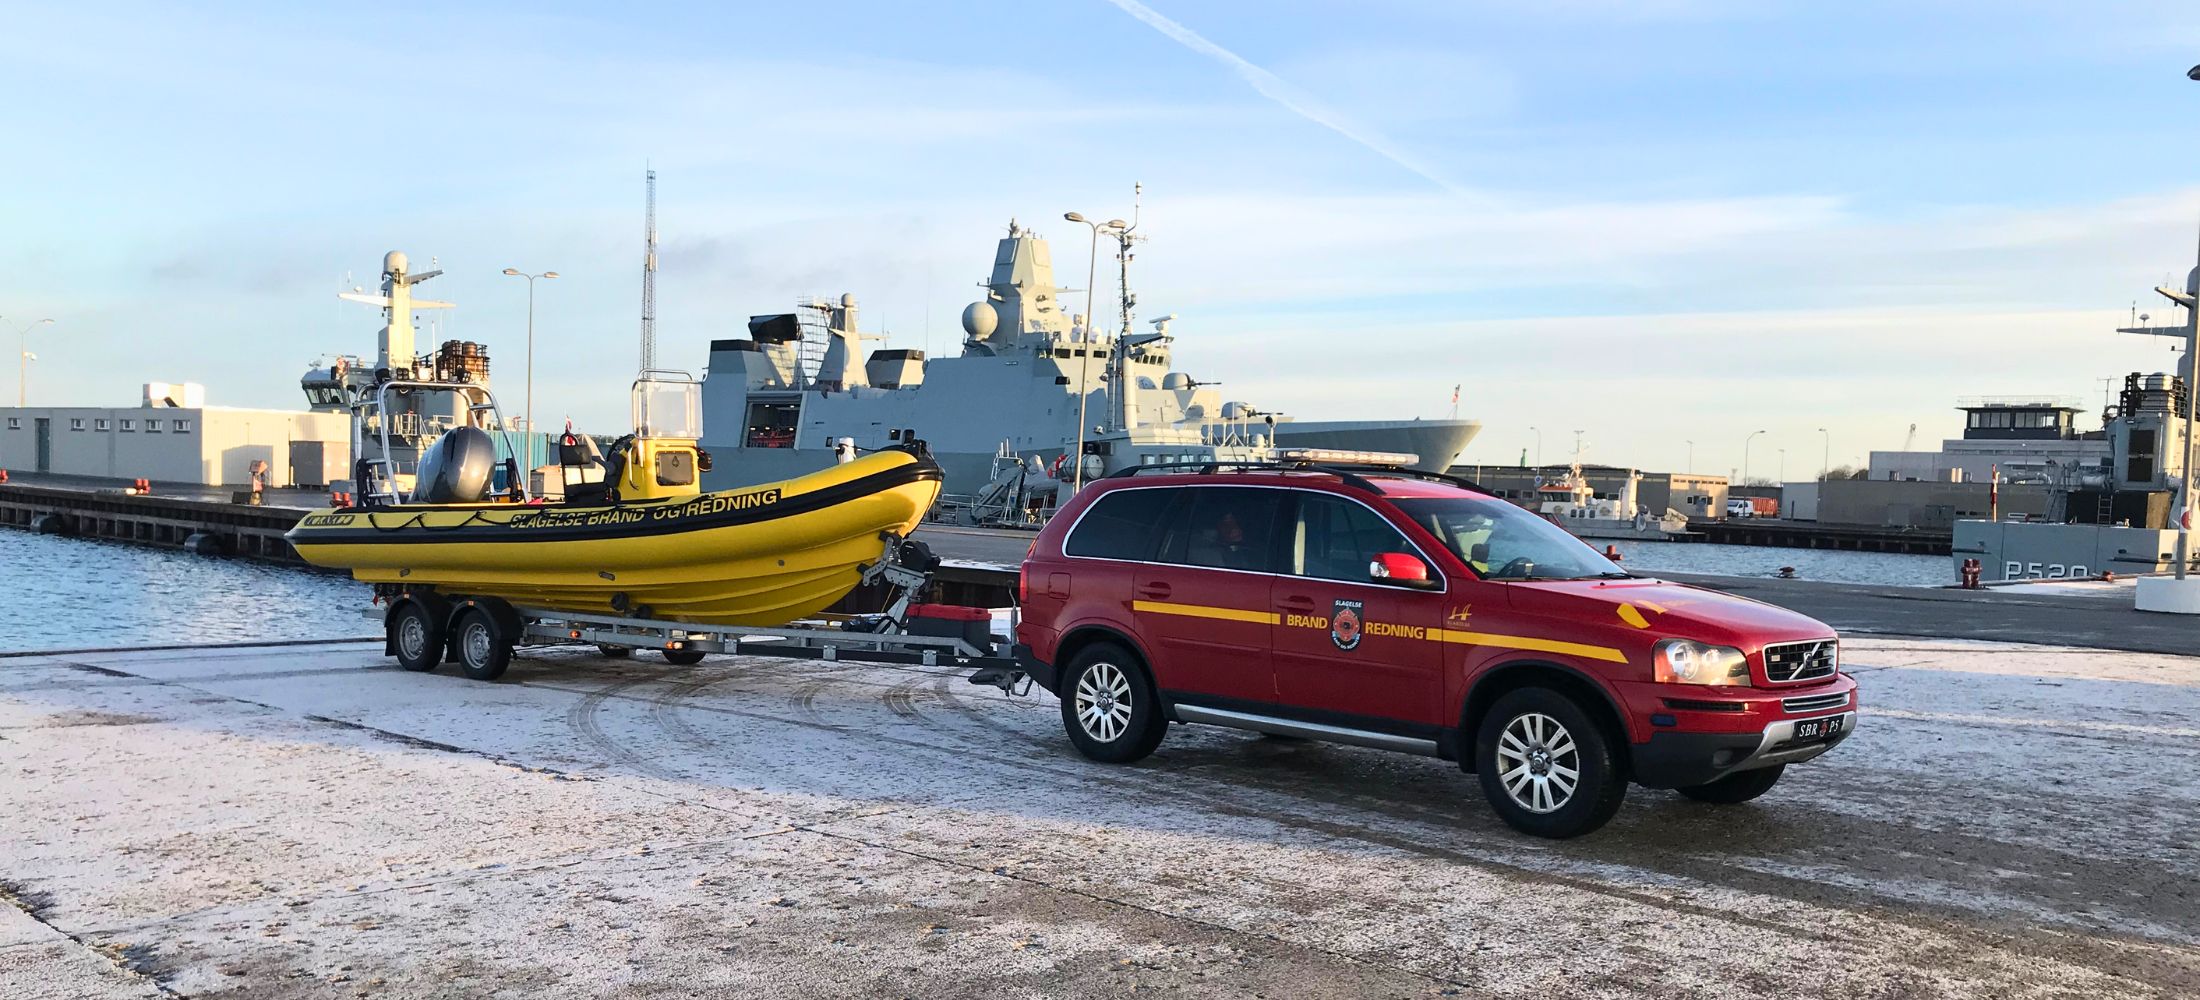 Tornado-rescue-boat-ready-for-duty